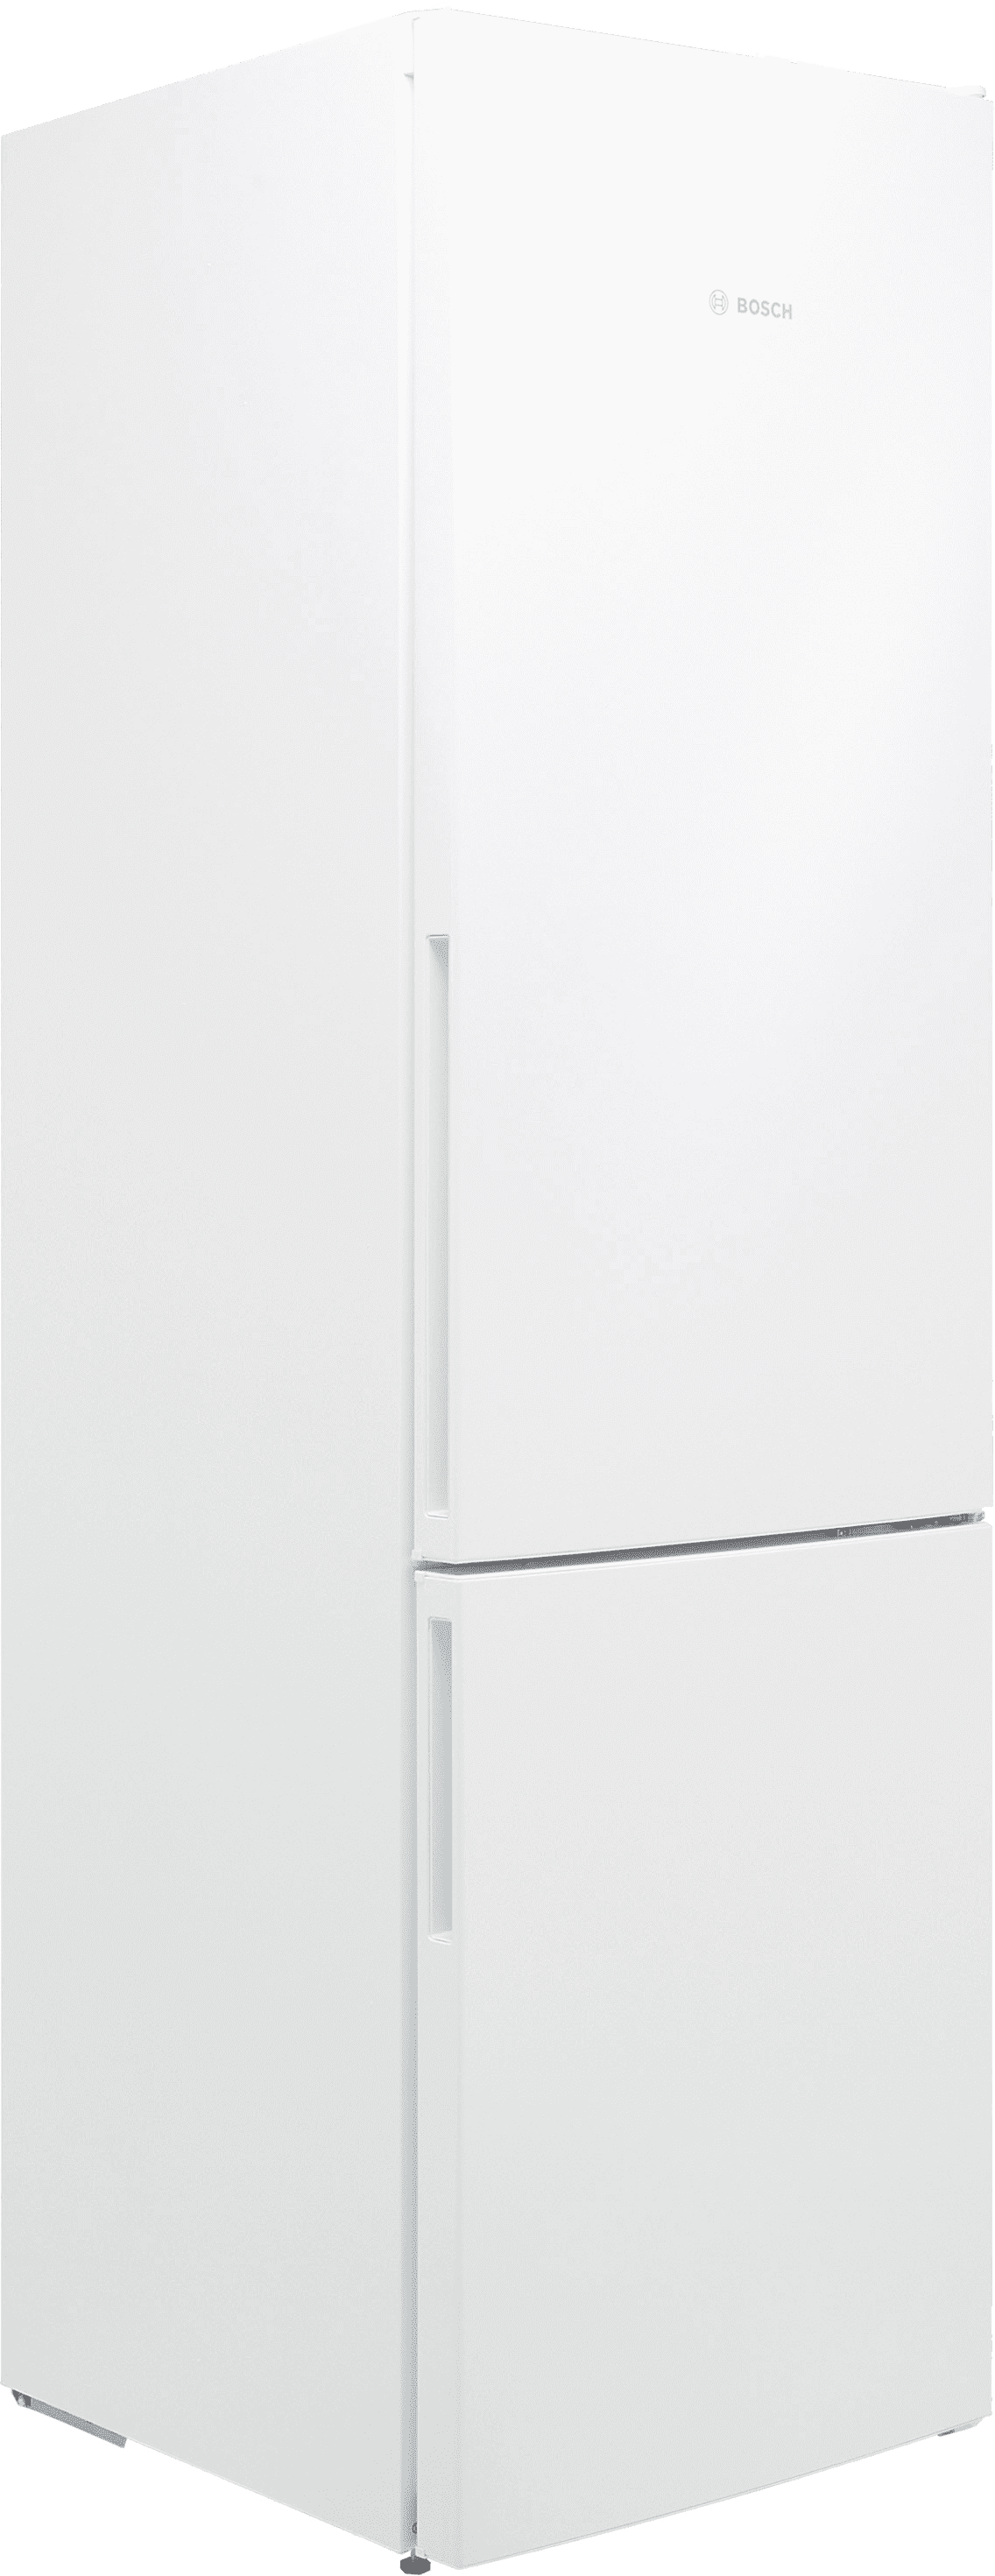 Bosch Series 4 KGV39VWEAG 70/30 Fridge Freezer - White - E Rated, White